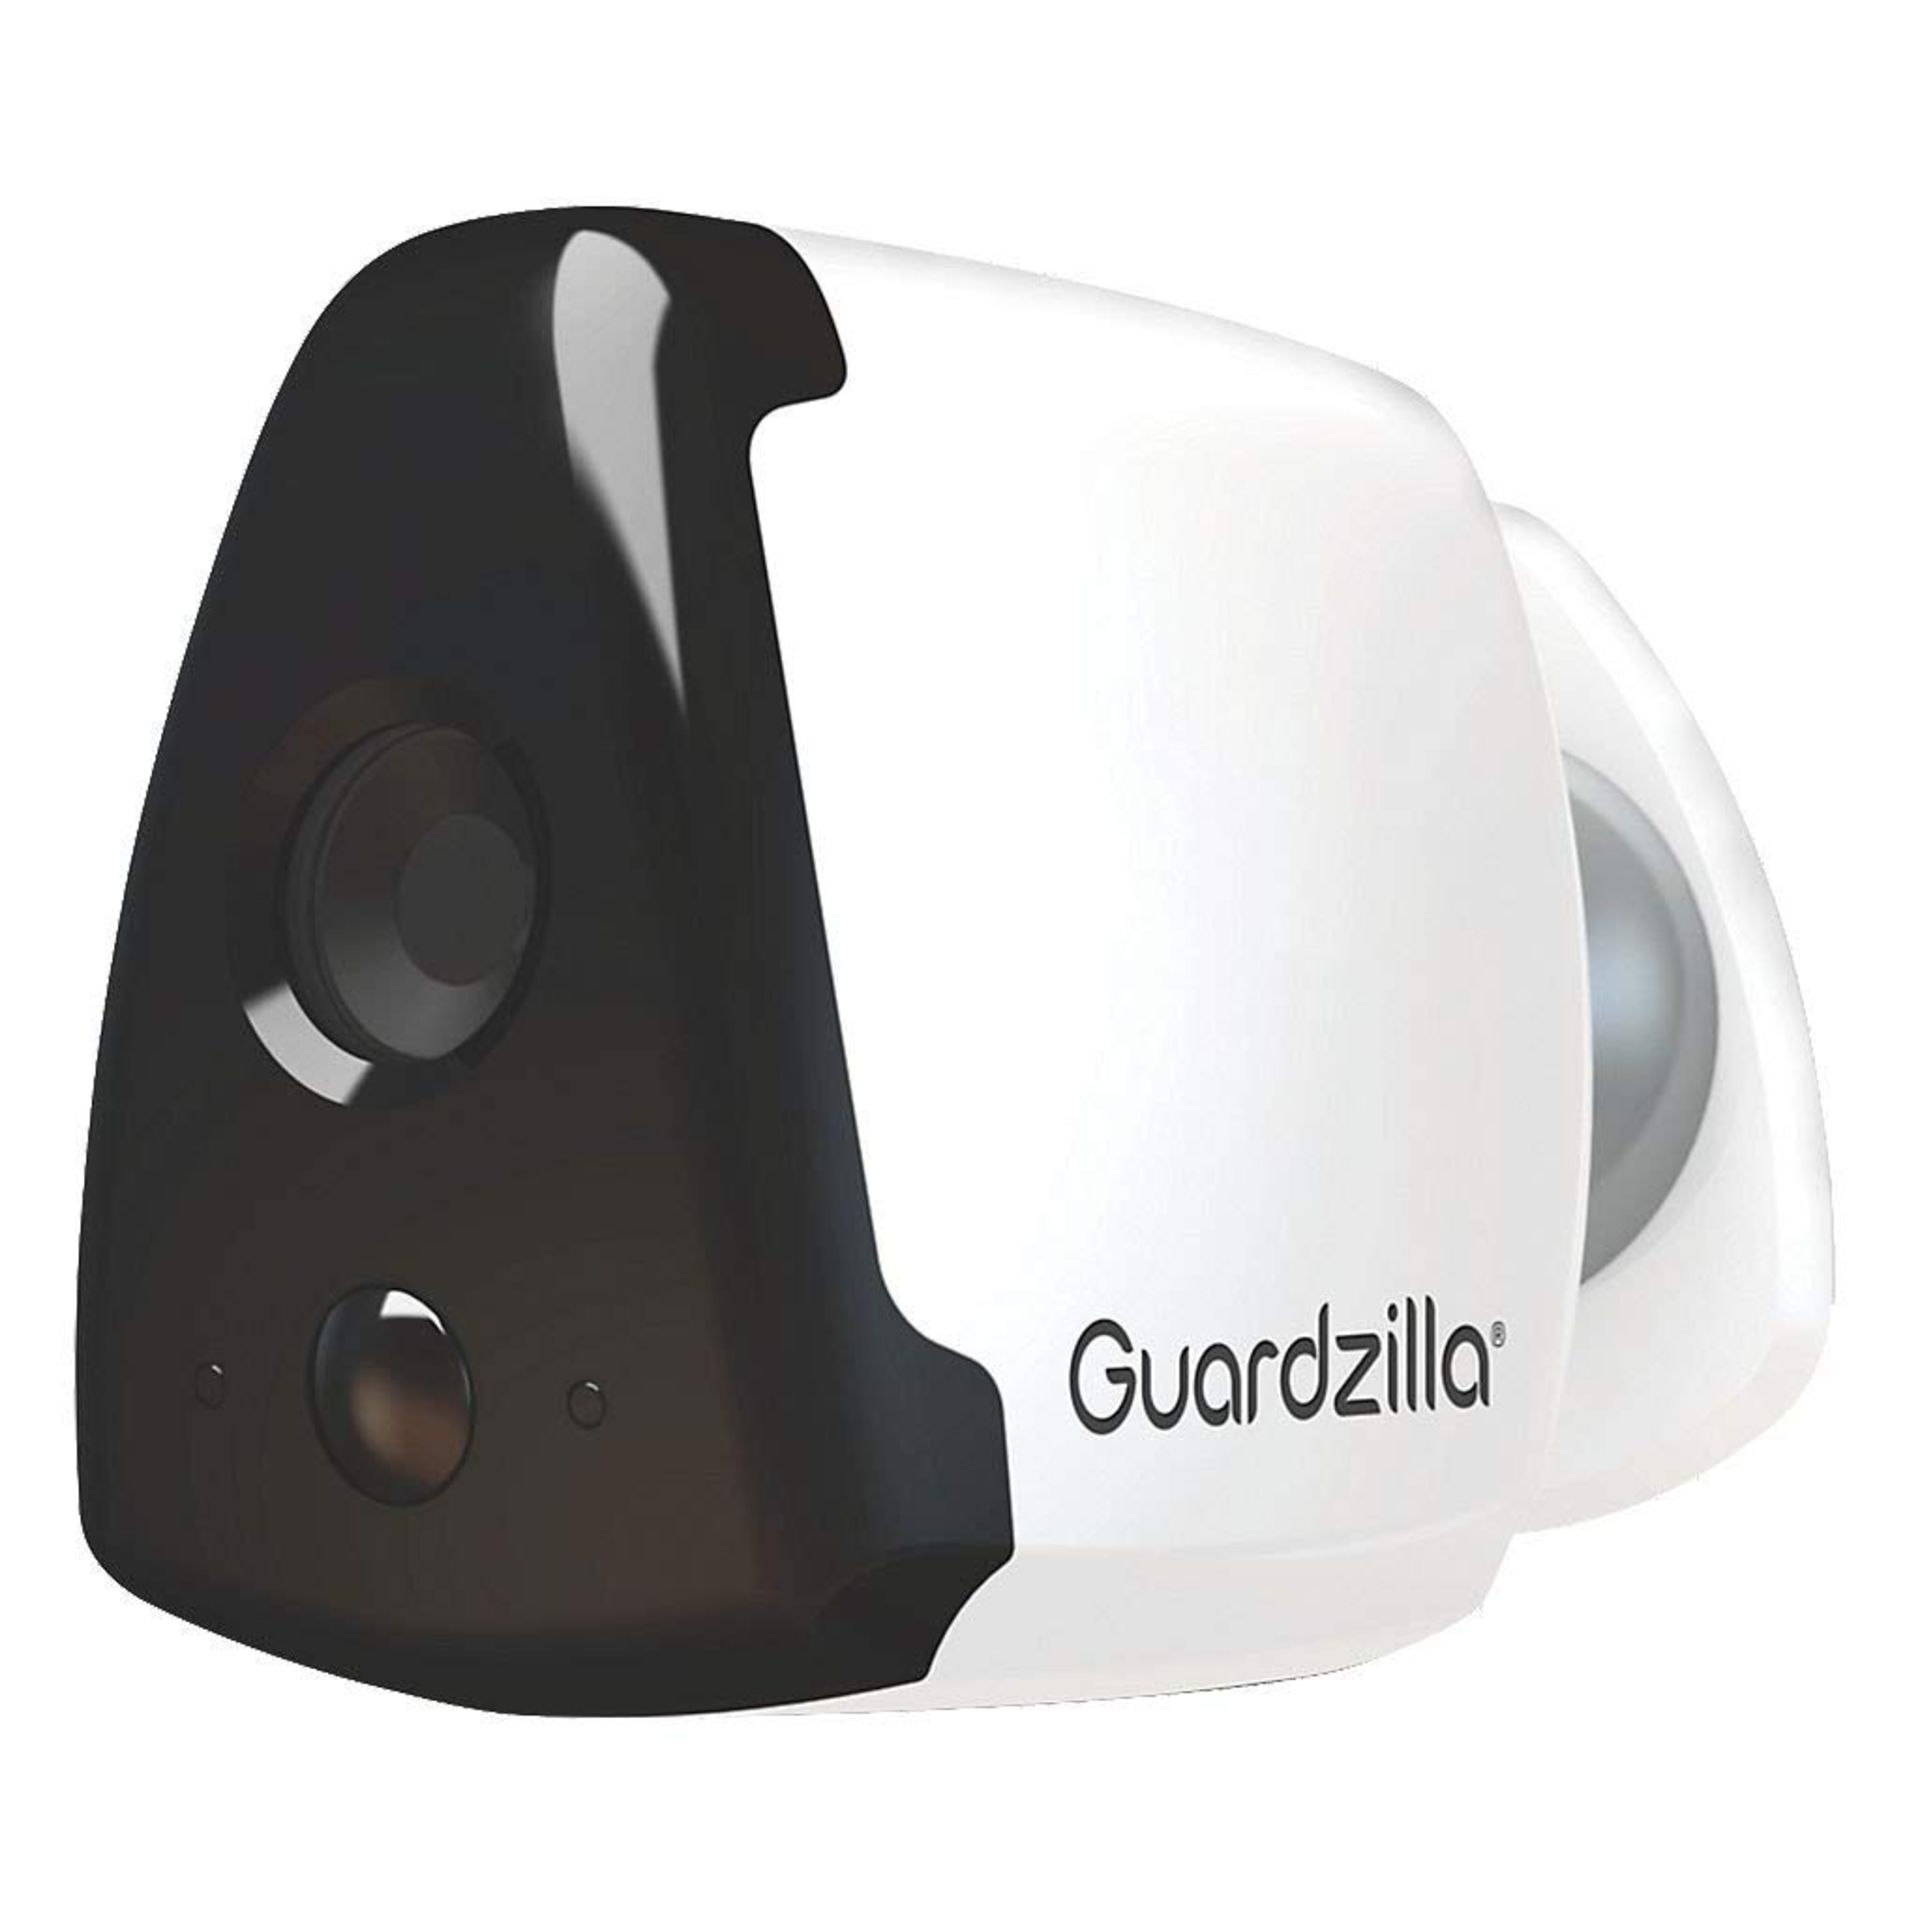 V Brand New Guardzilla Indoor/Outdoor Wireless Full HD WiFi Smart Security Camera - 6m IR/Night